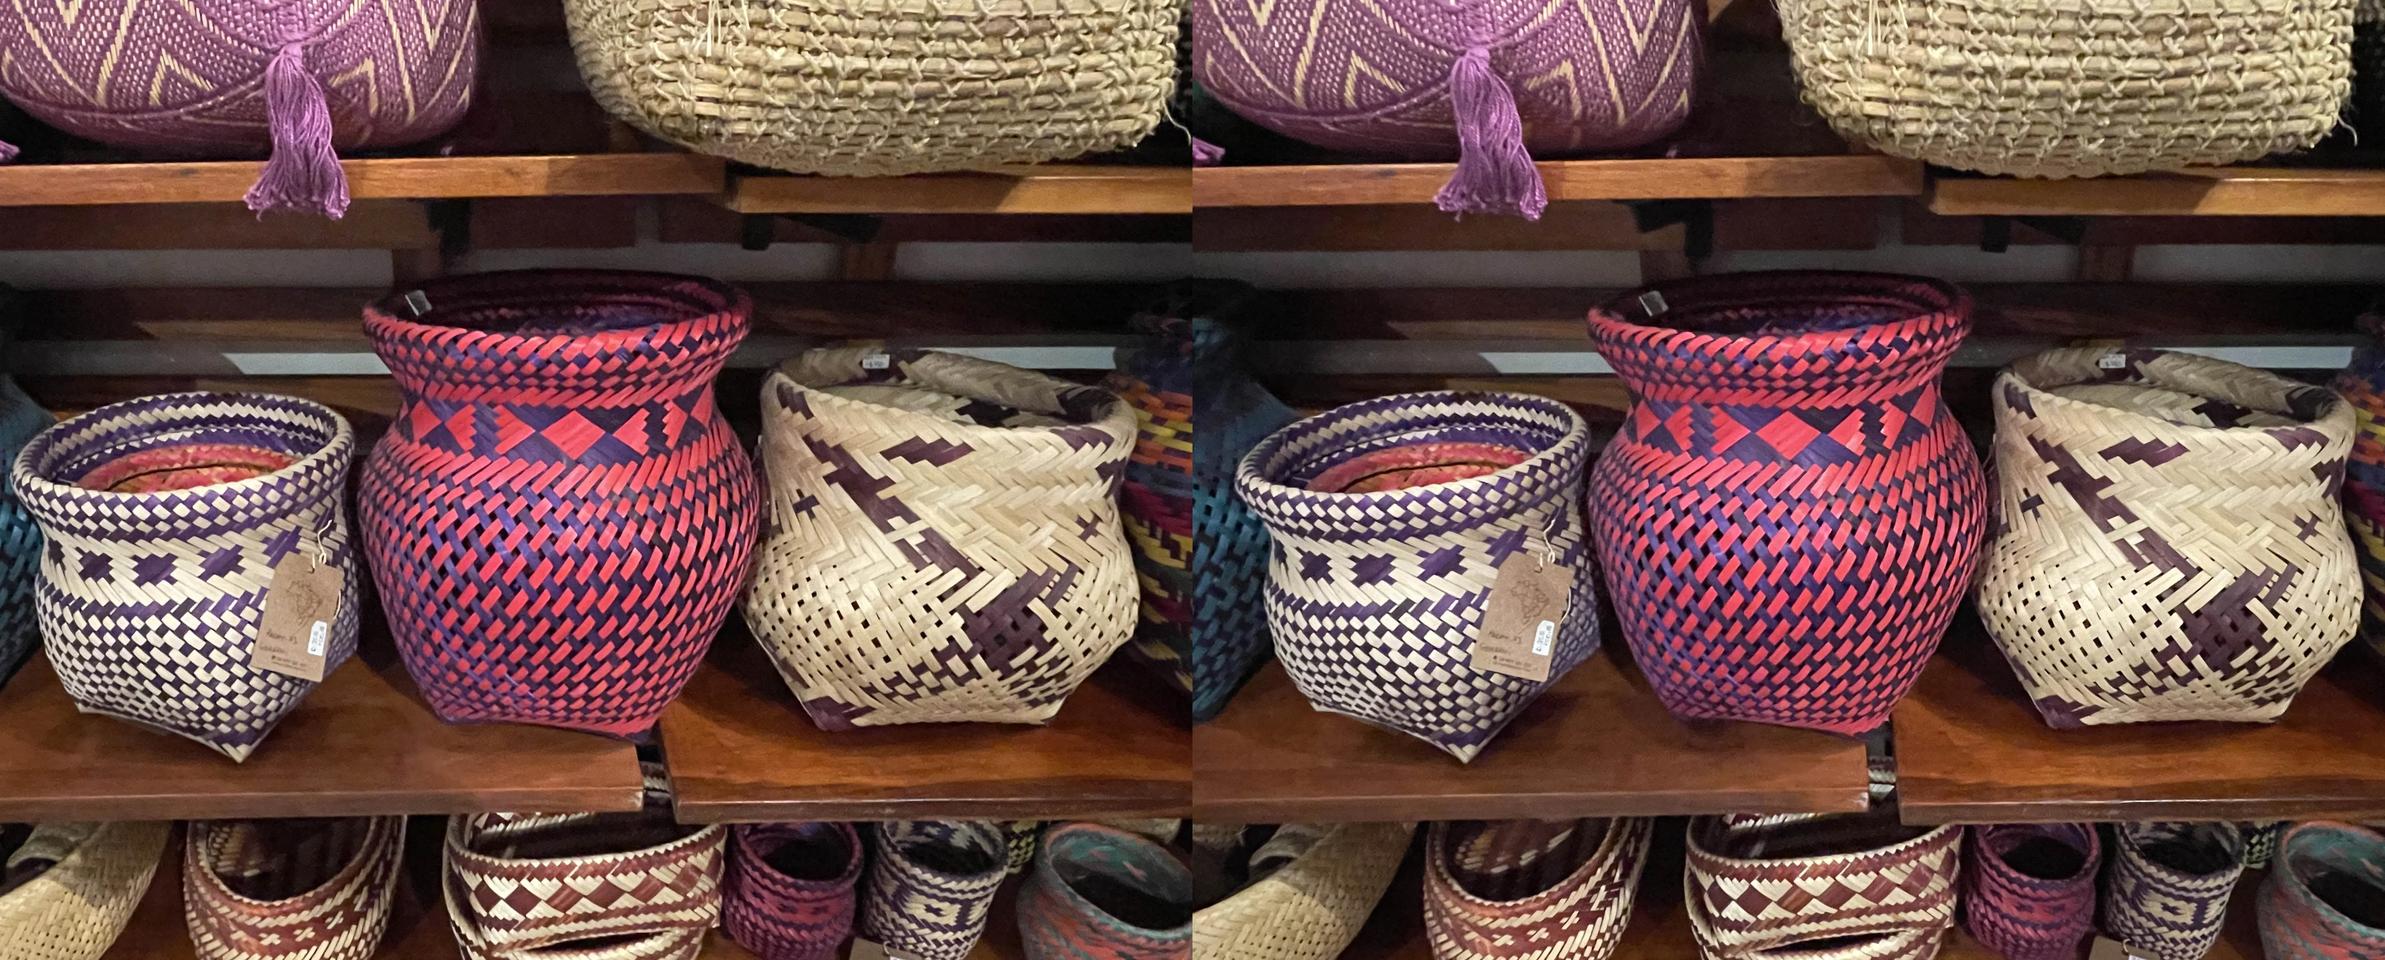 Colorful Baskets for sale in Paraty, RJ Brasil